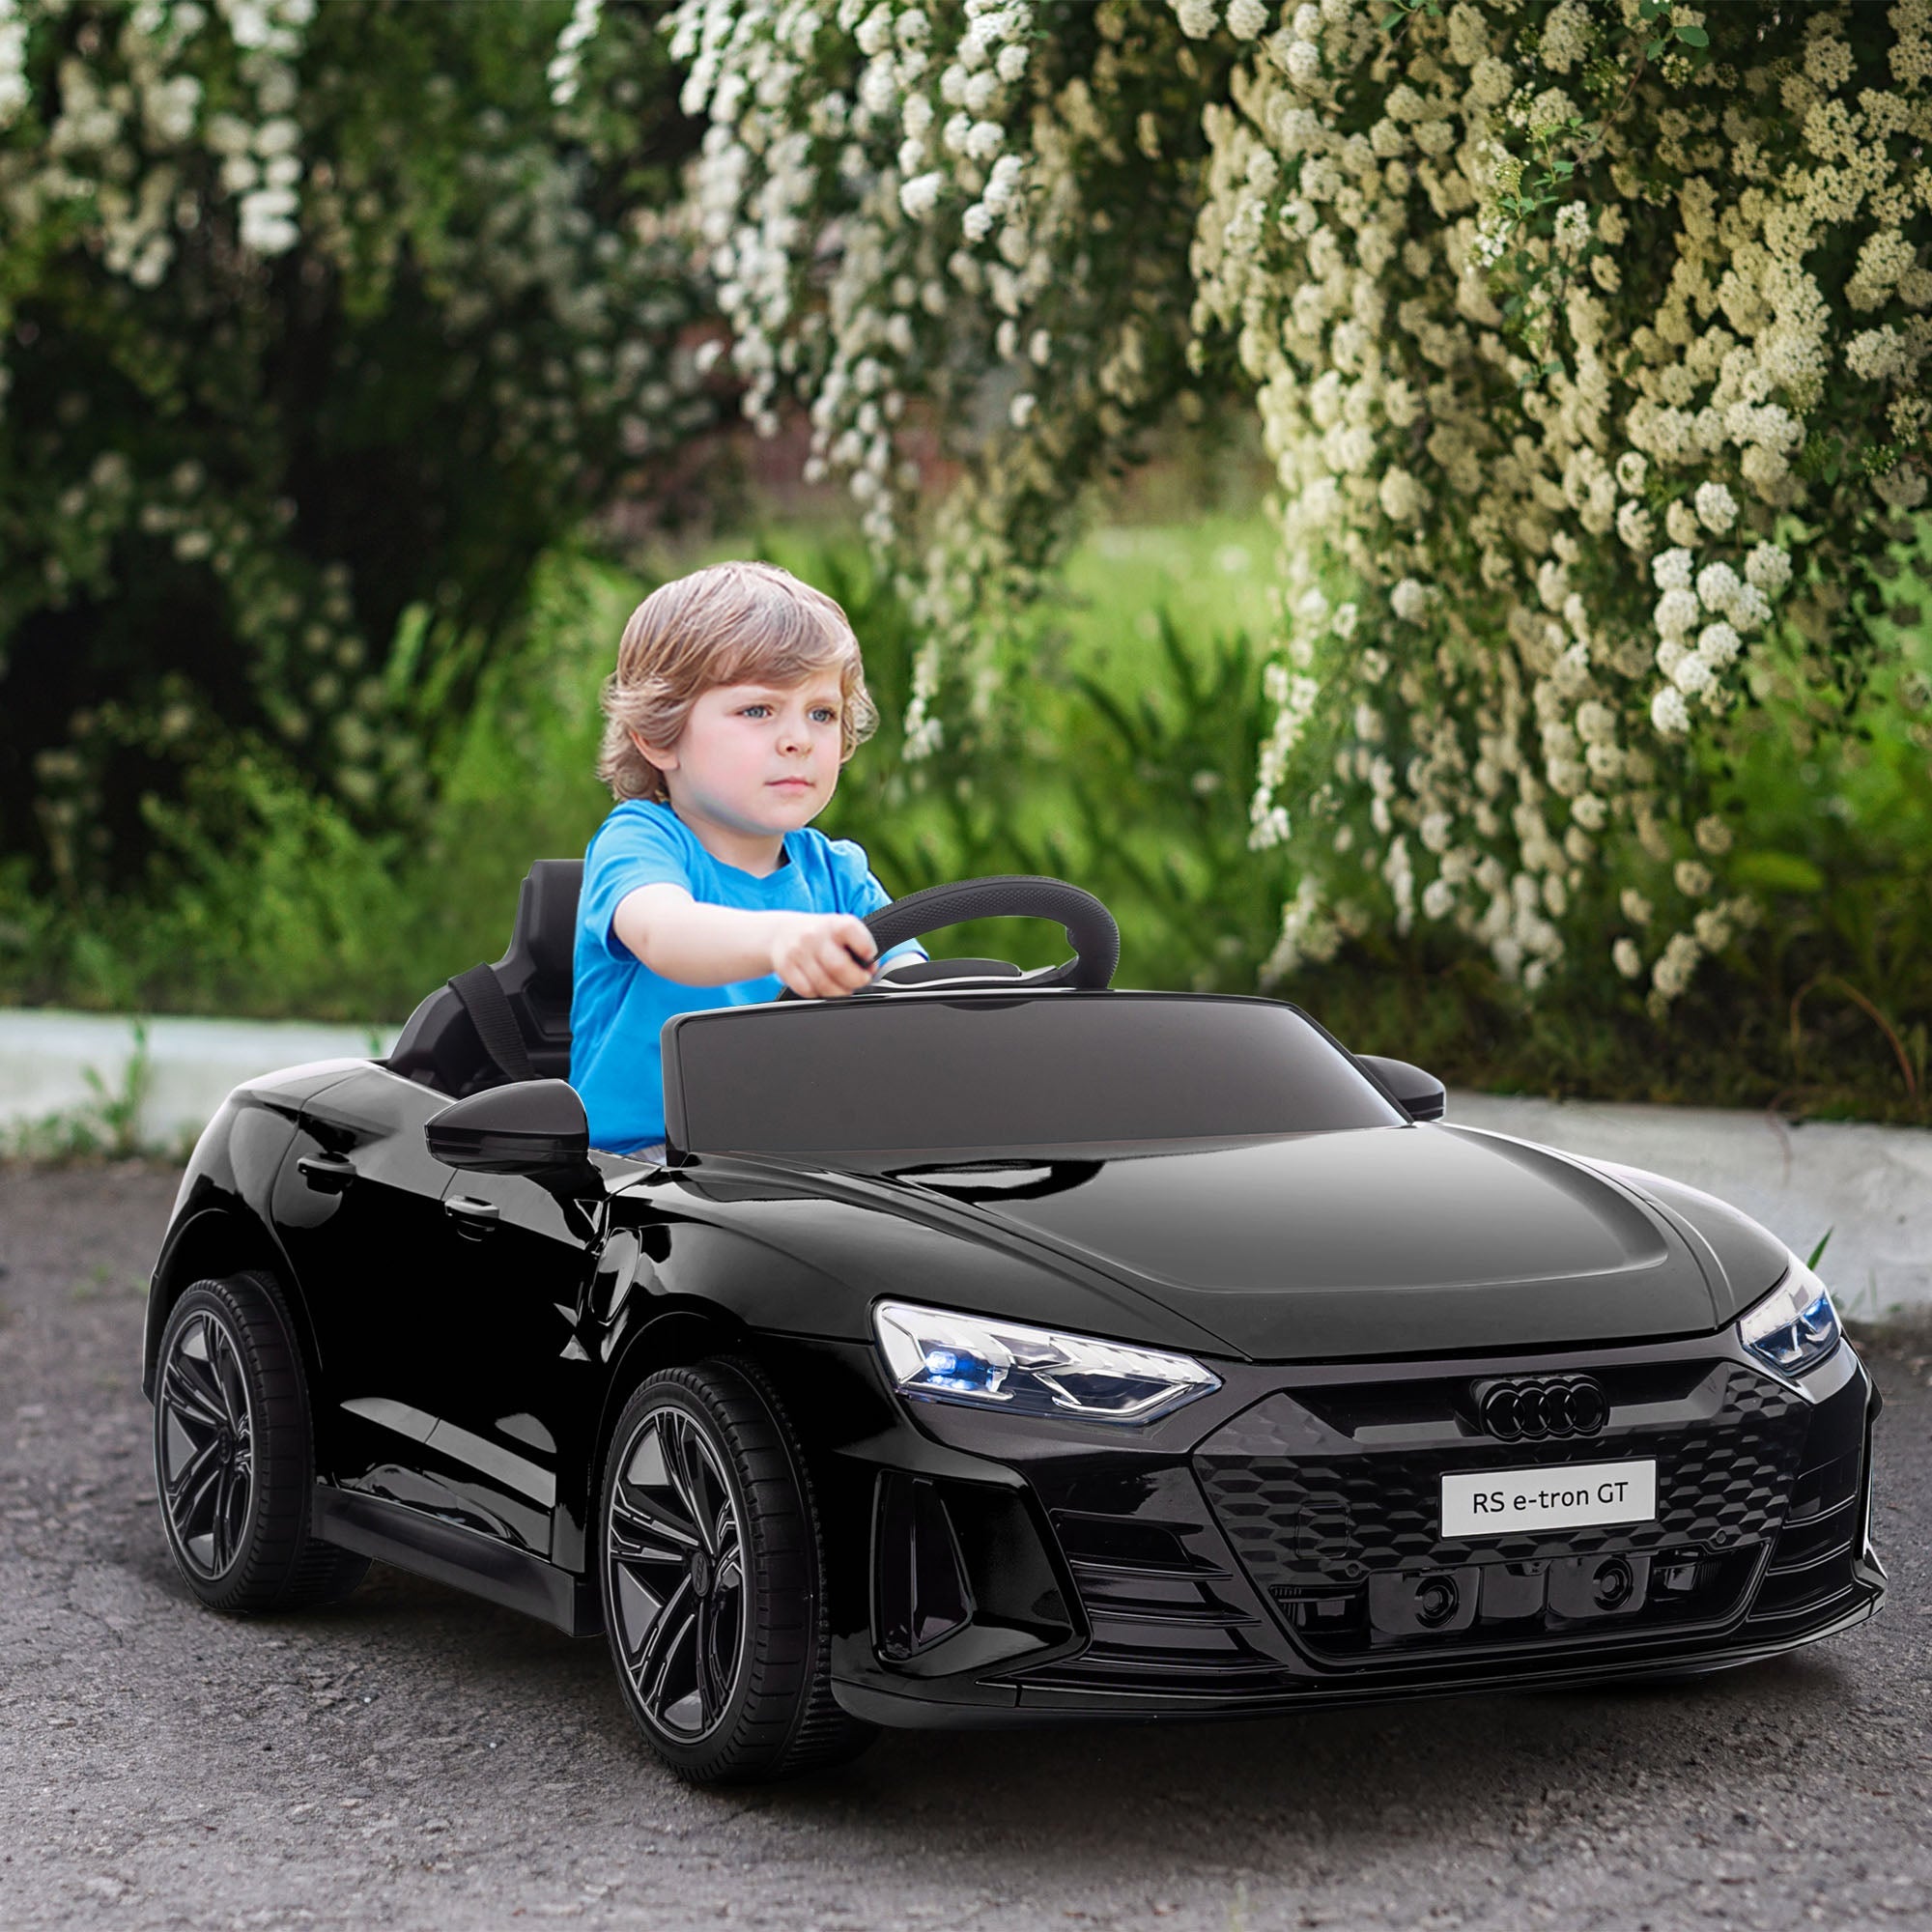 Audi Licensed 12V Kids Electric Ride-On, with Remote Control, Suspension System, Lights, Music, Motor - Black-1